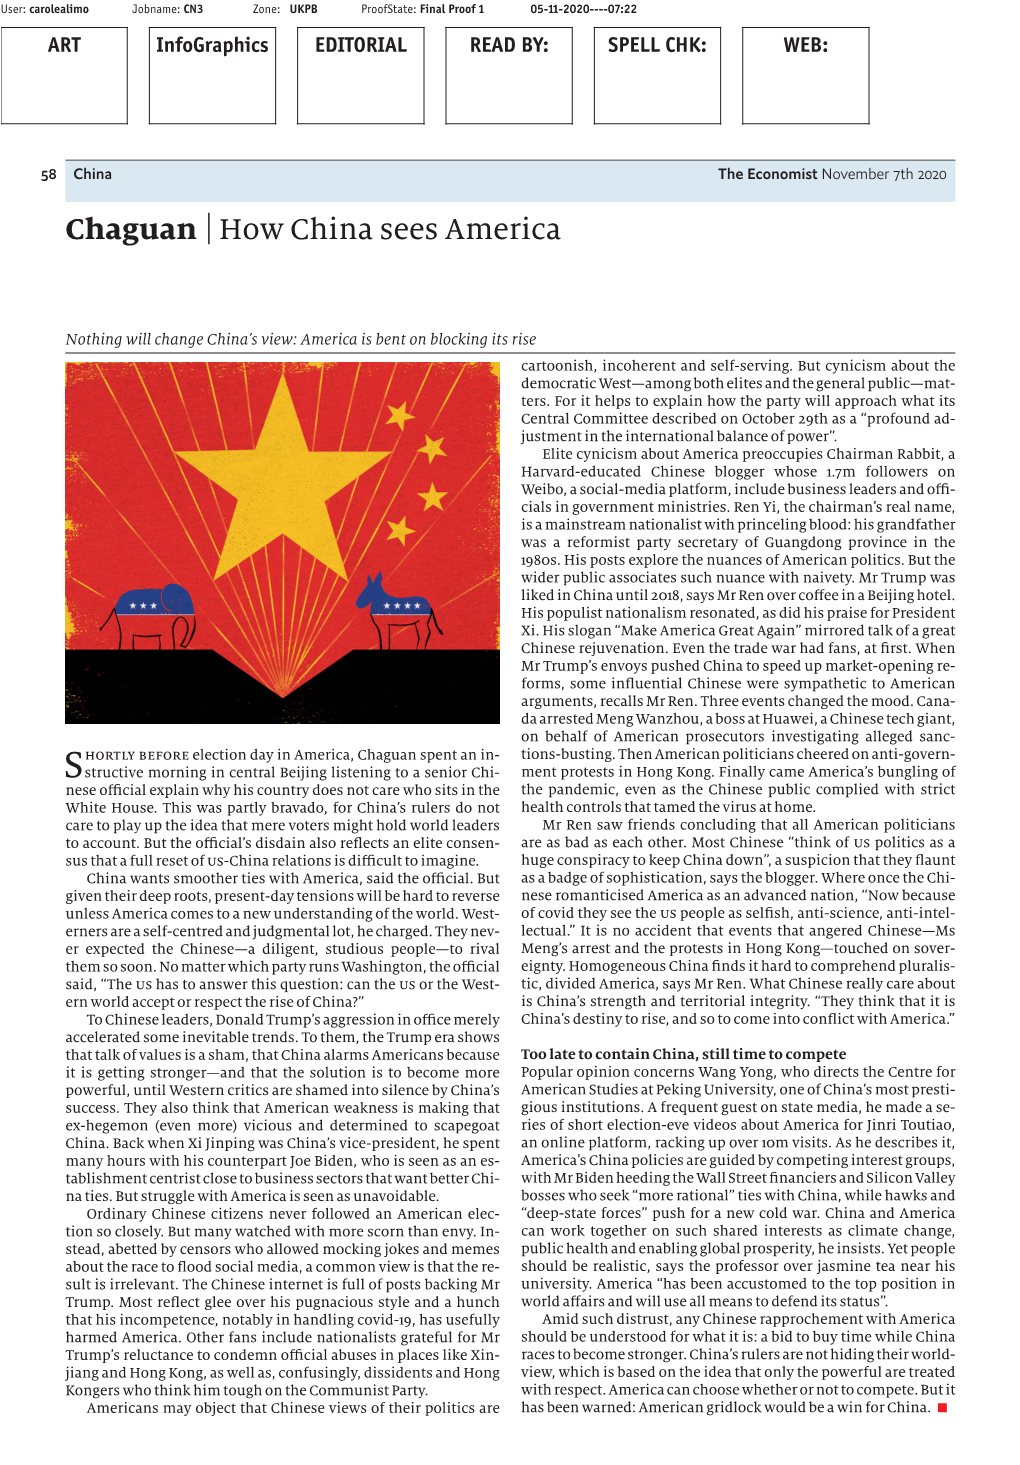 Chaguan How China Sees America